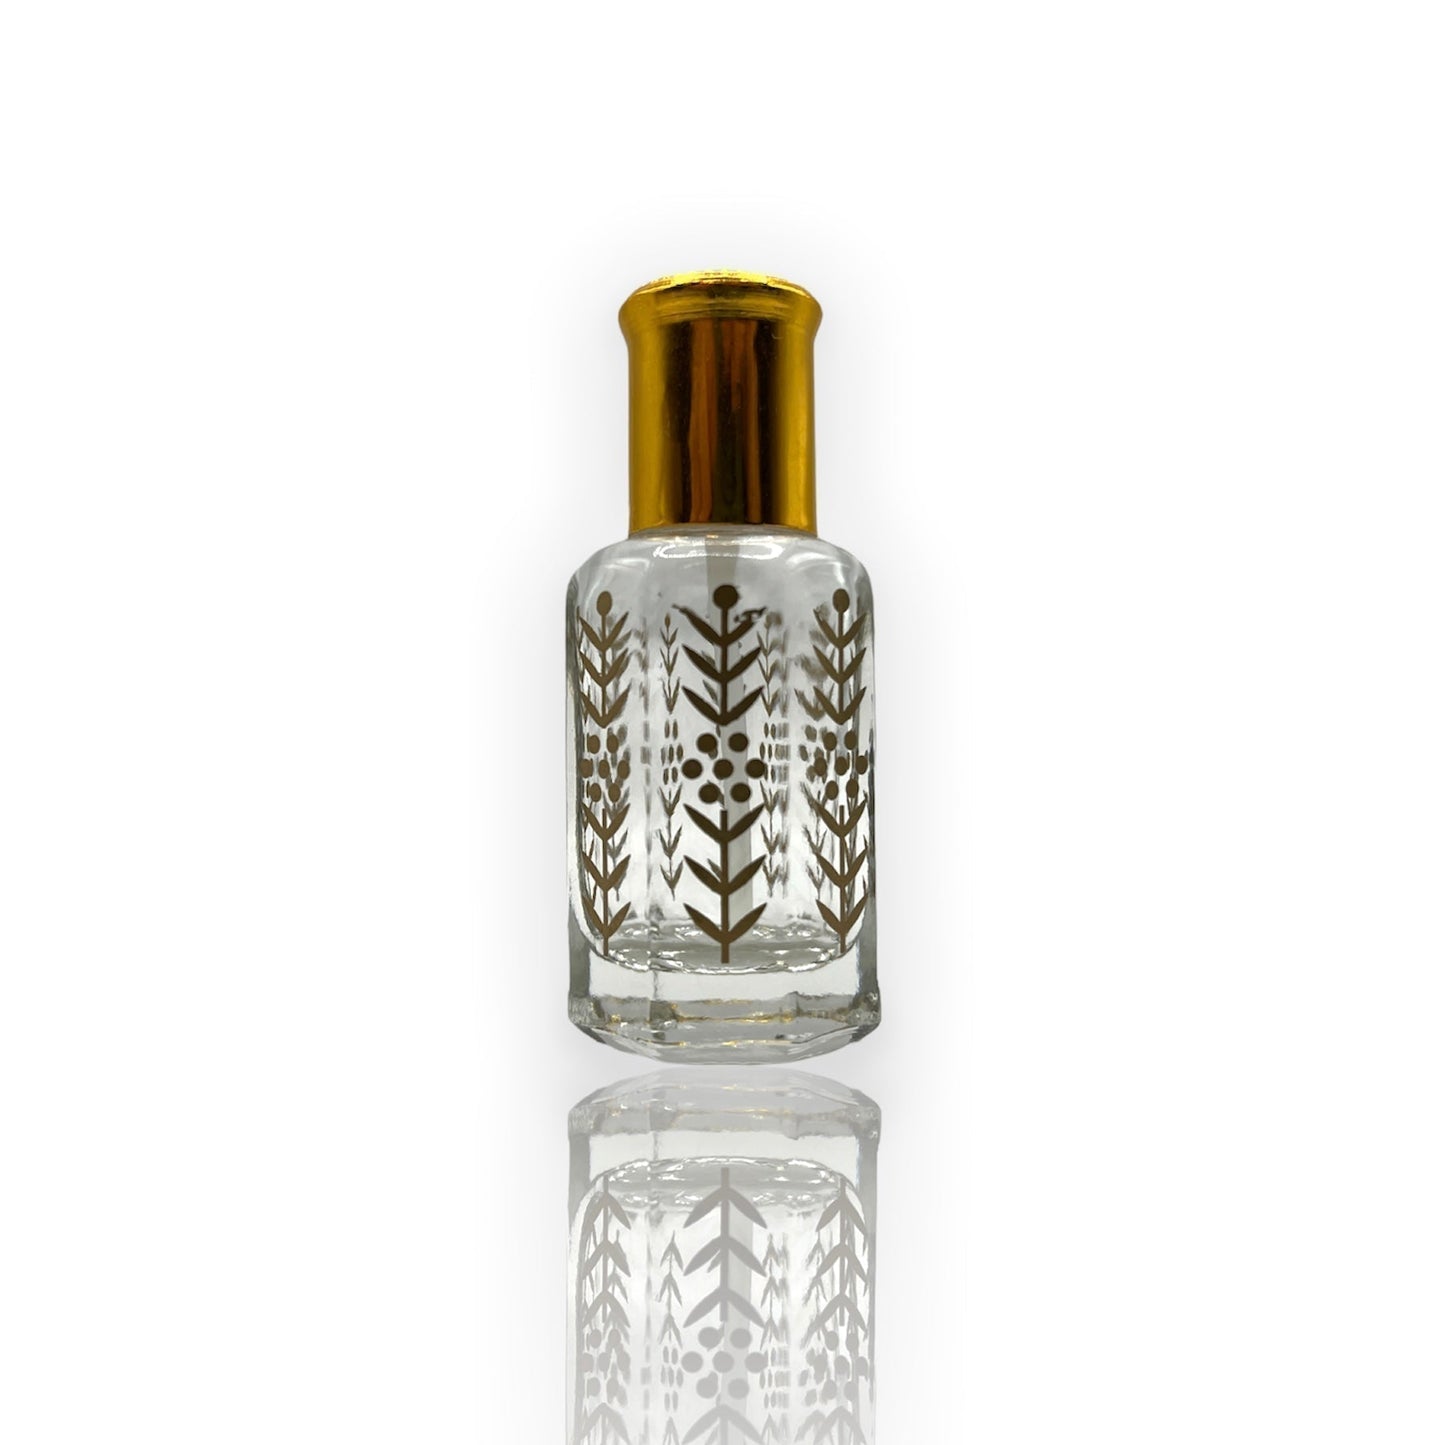 M-17 Oil Perfume *Inspired By Armani DArab